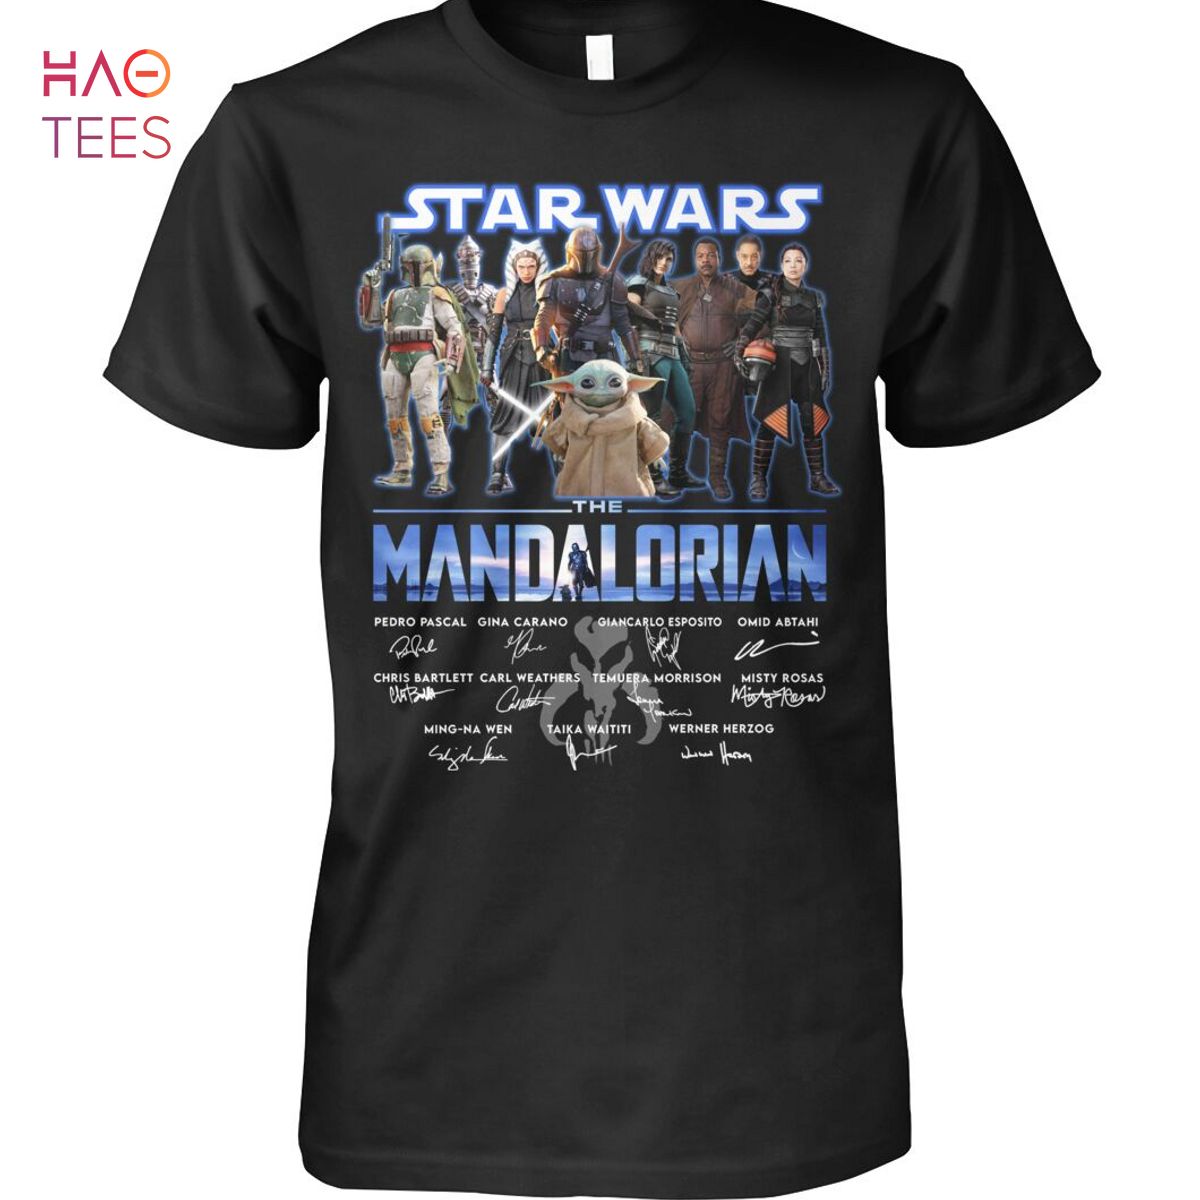 Star Wars Mandalorrian Shirt Limited Edition